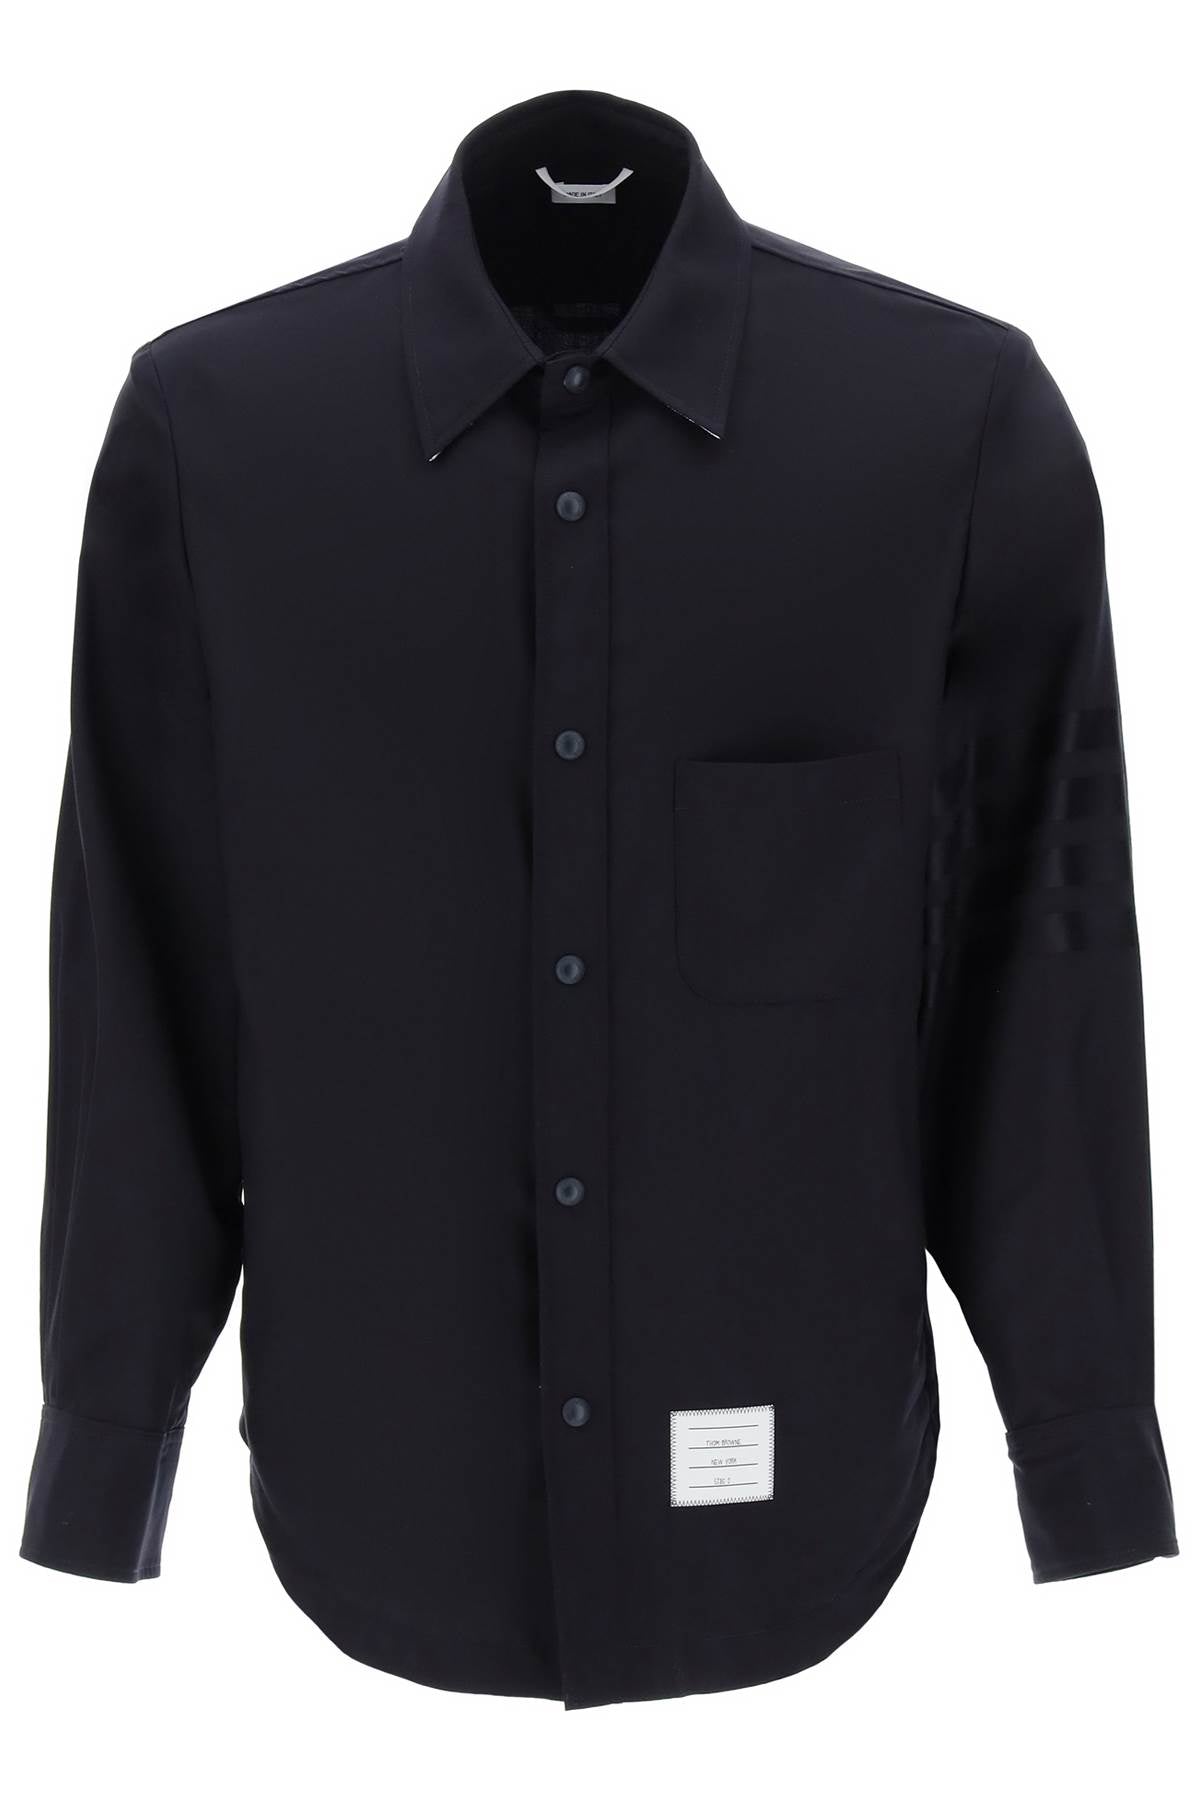 Thom browne 4-bar shirt in light wool-0